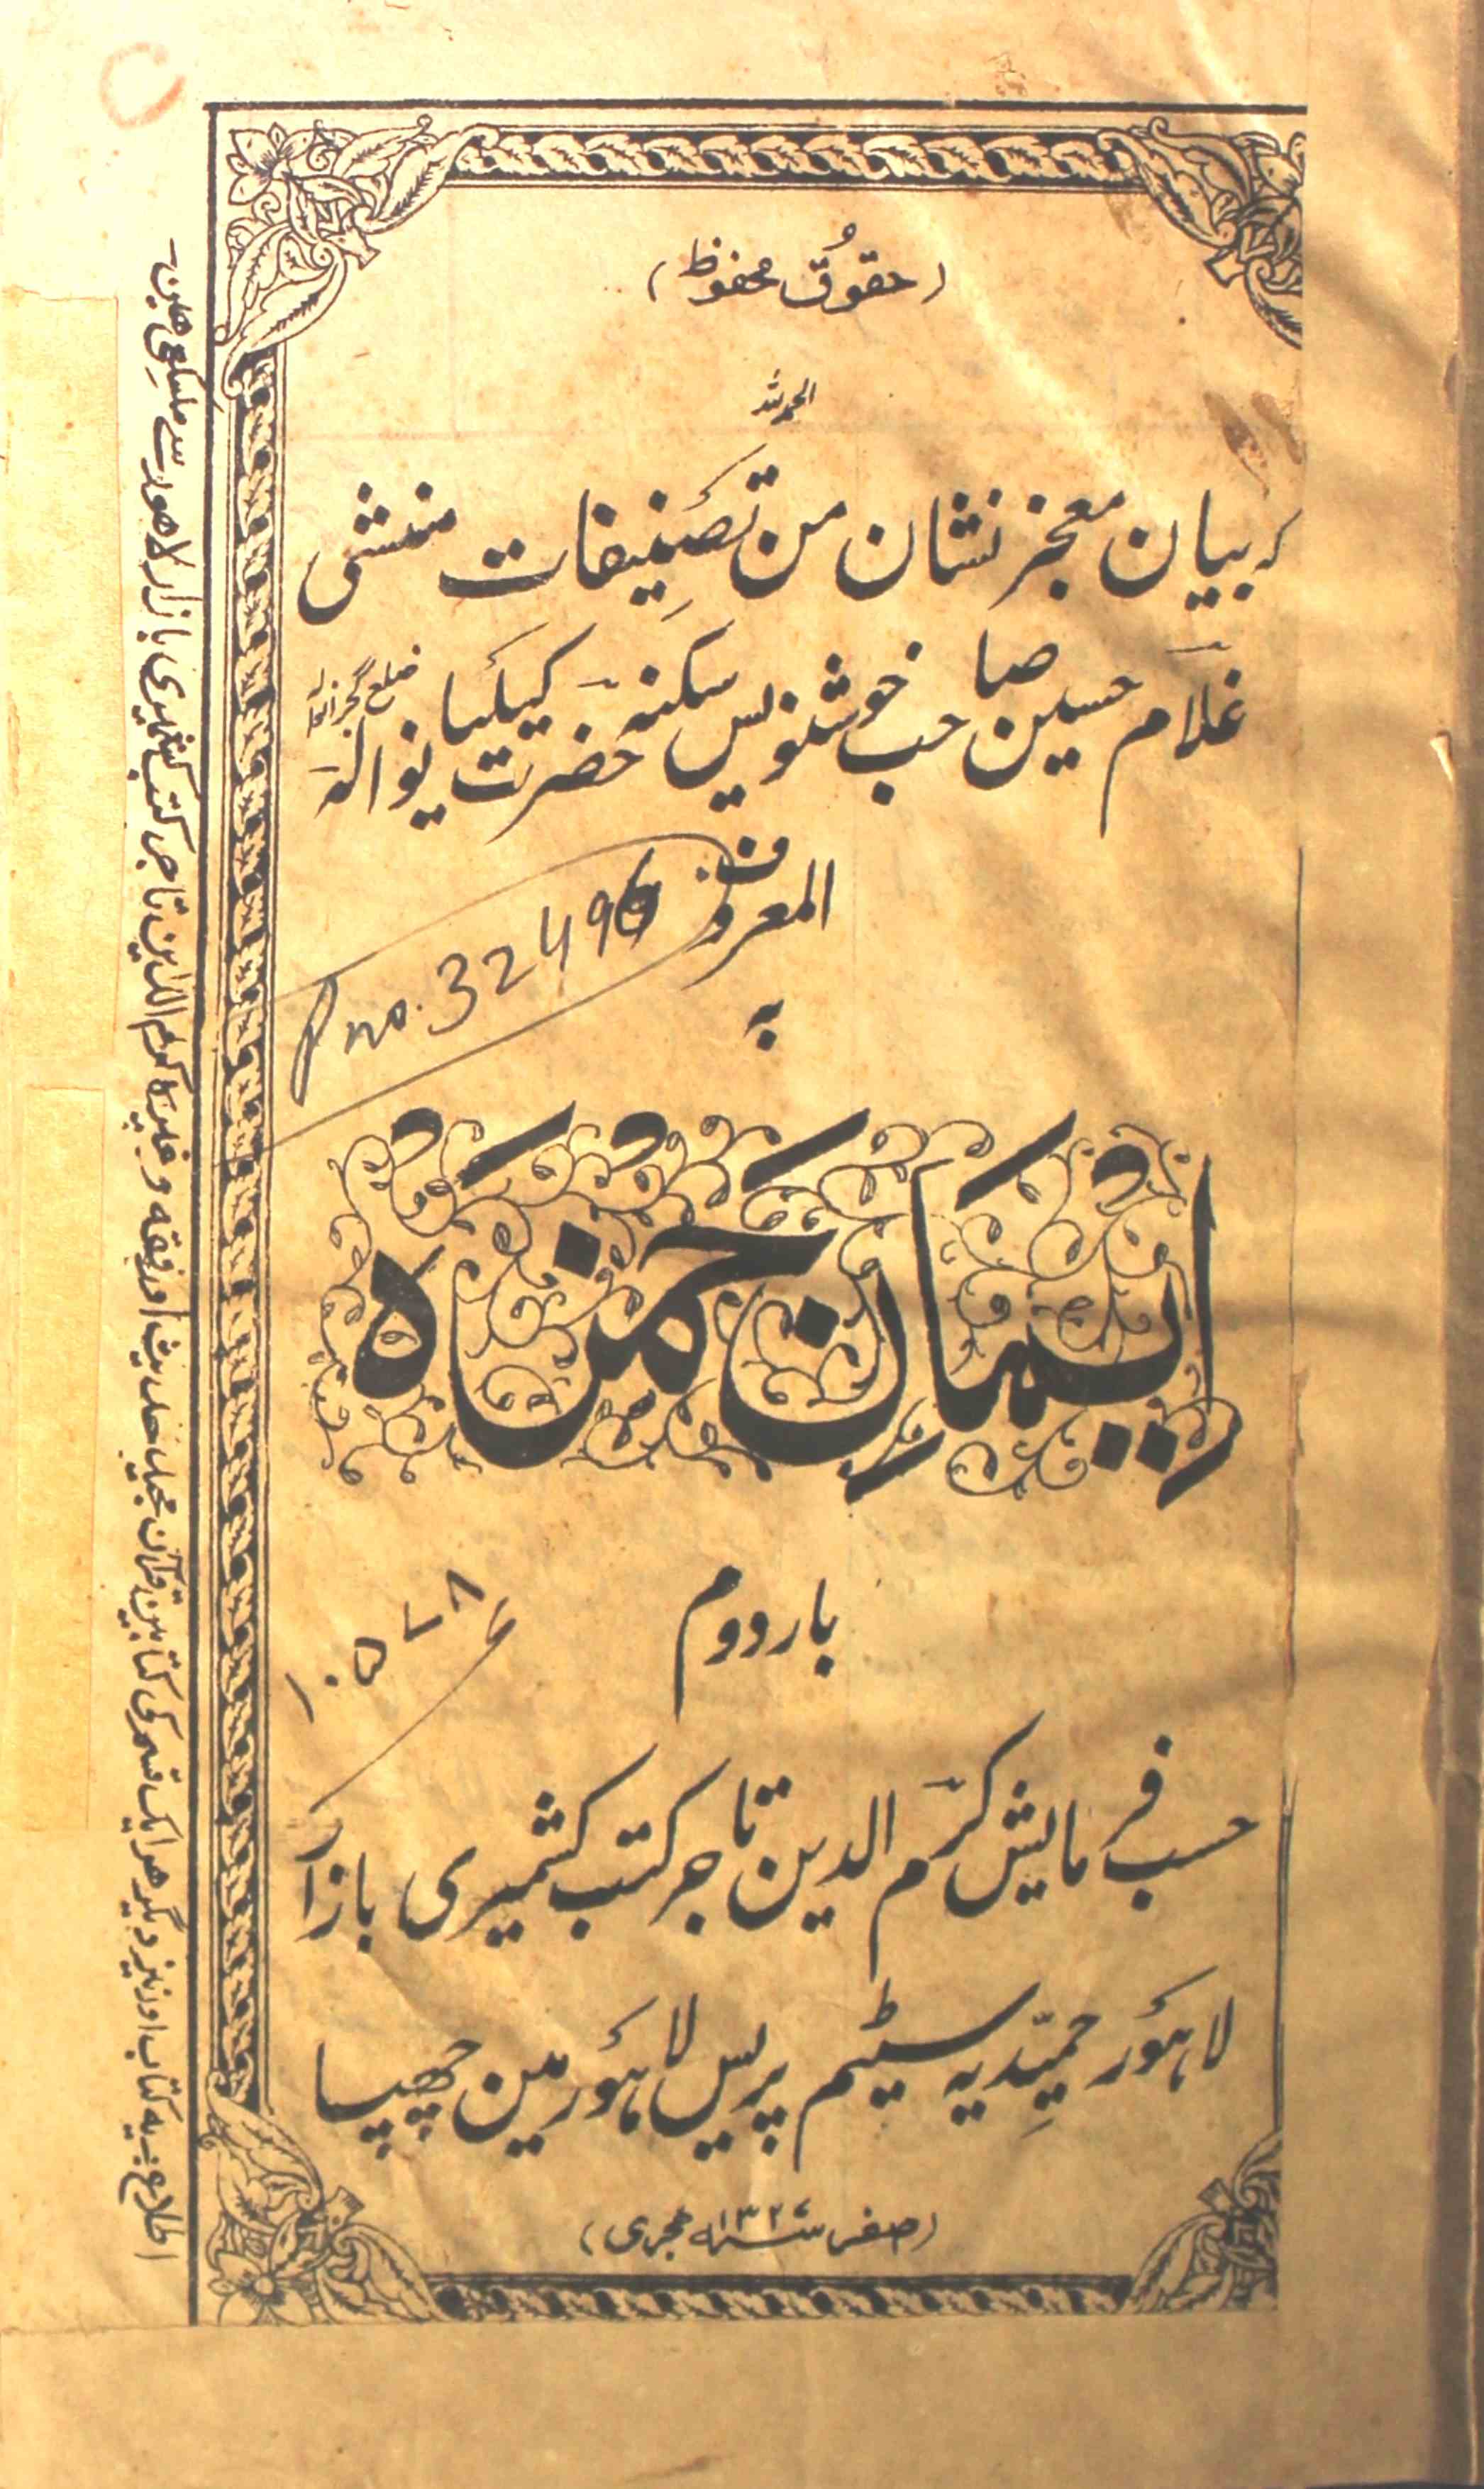 Iman-e-Hamza